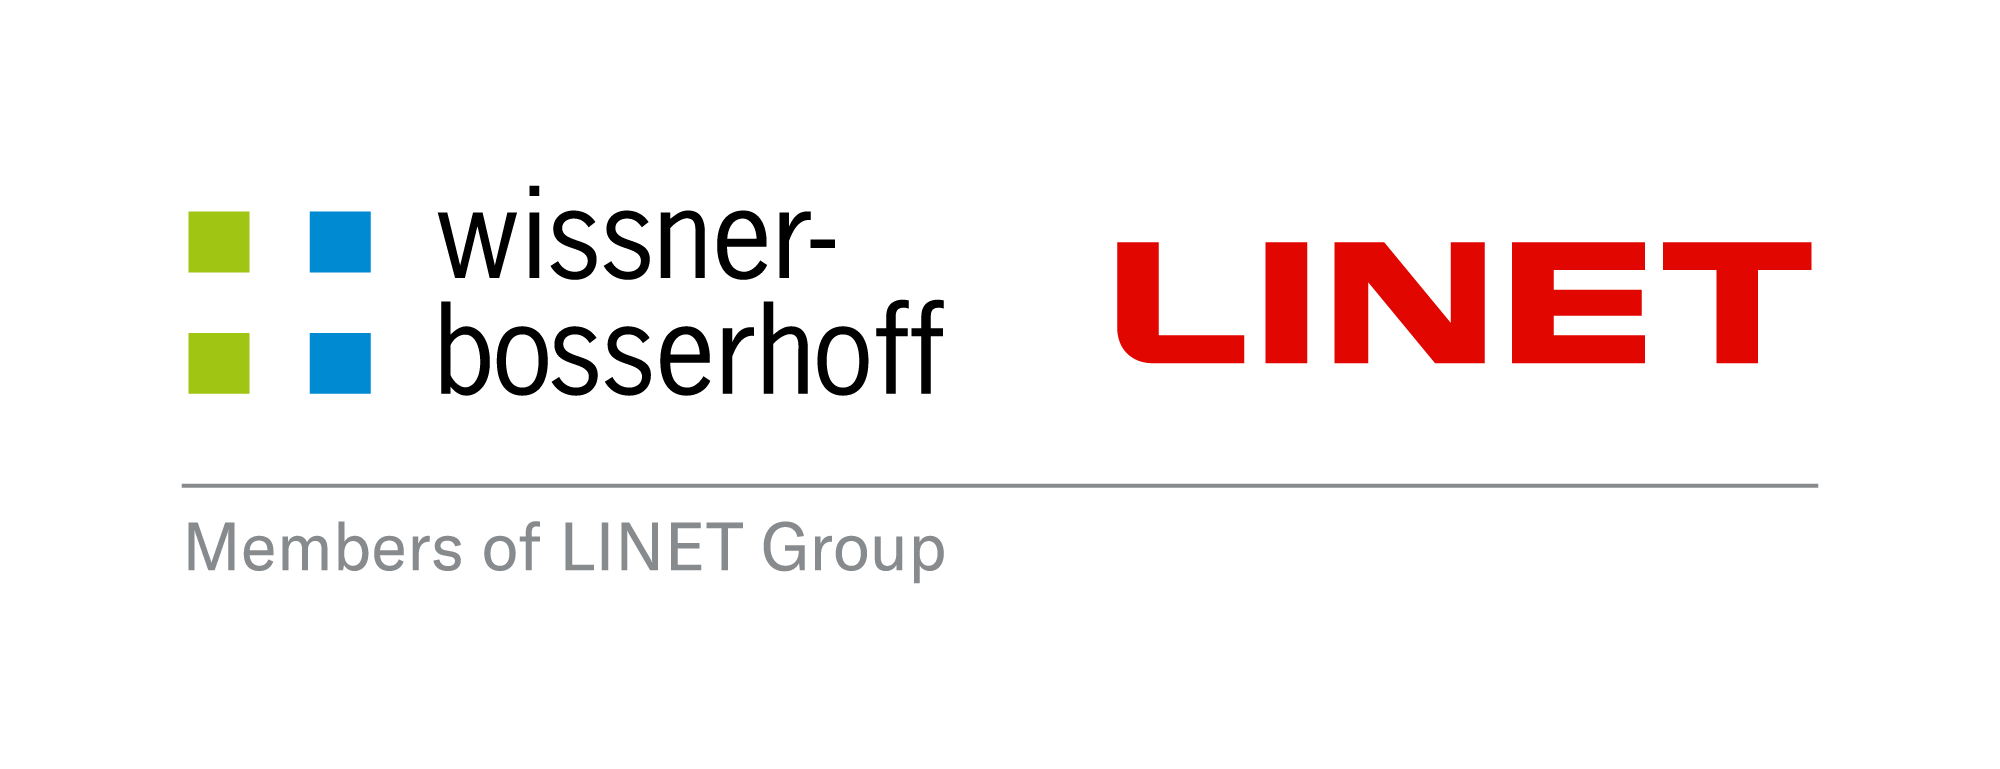 linet-group-members_logo_color_rgb (002)